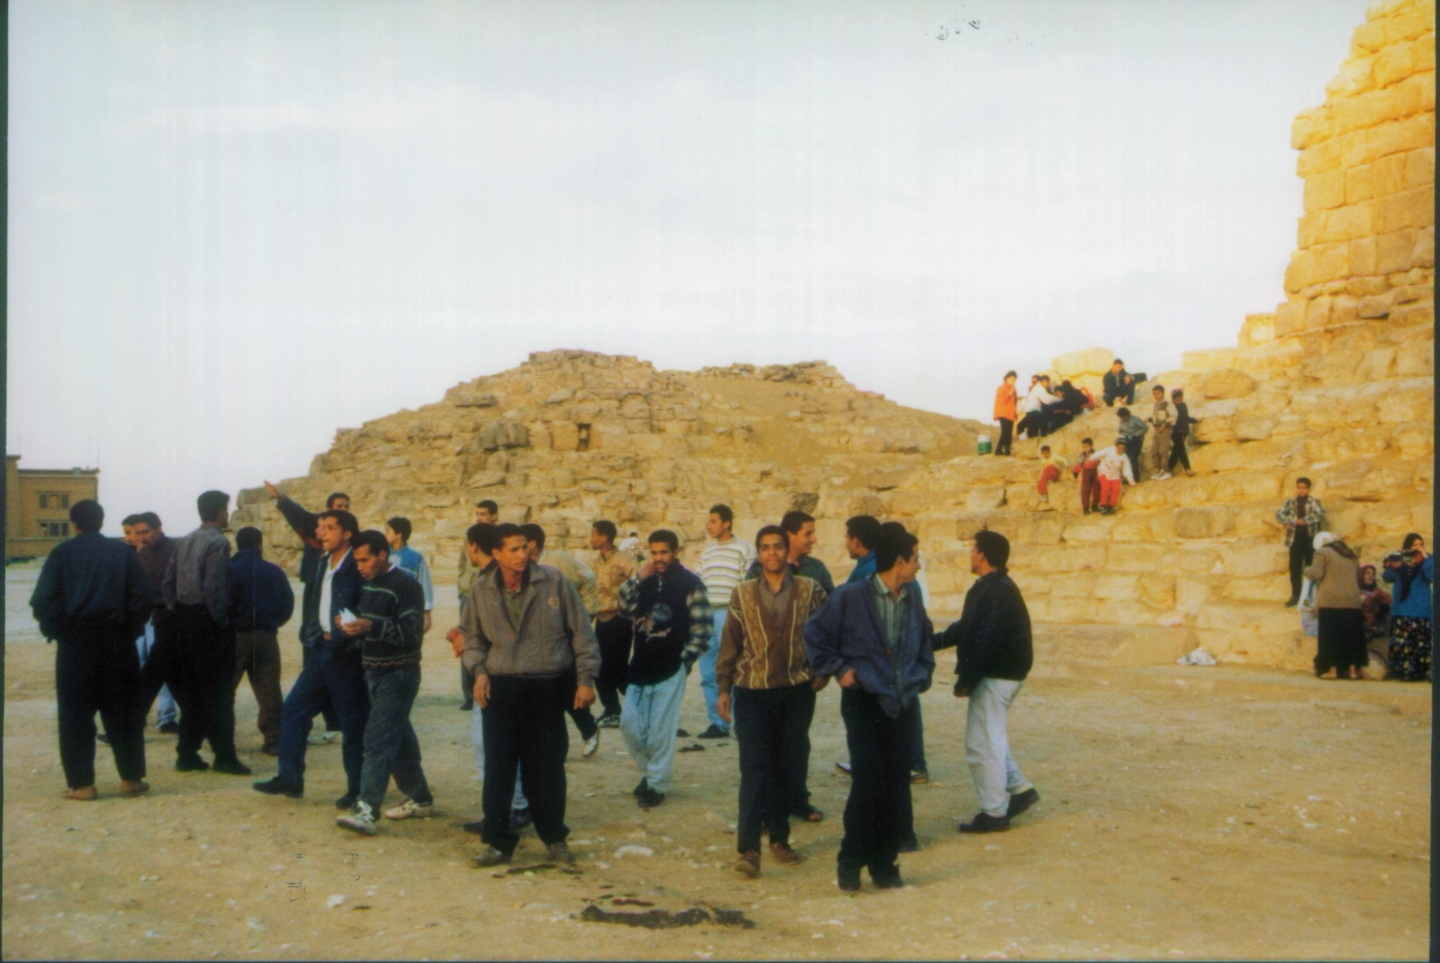 People at Pyramids of Giza Egypt 1998